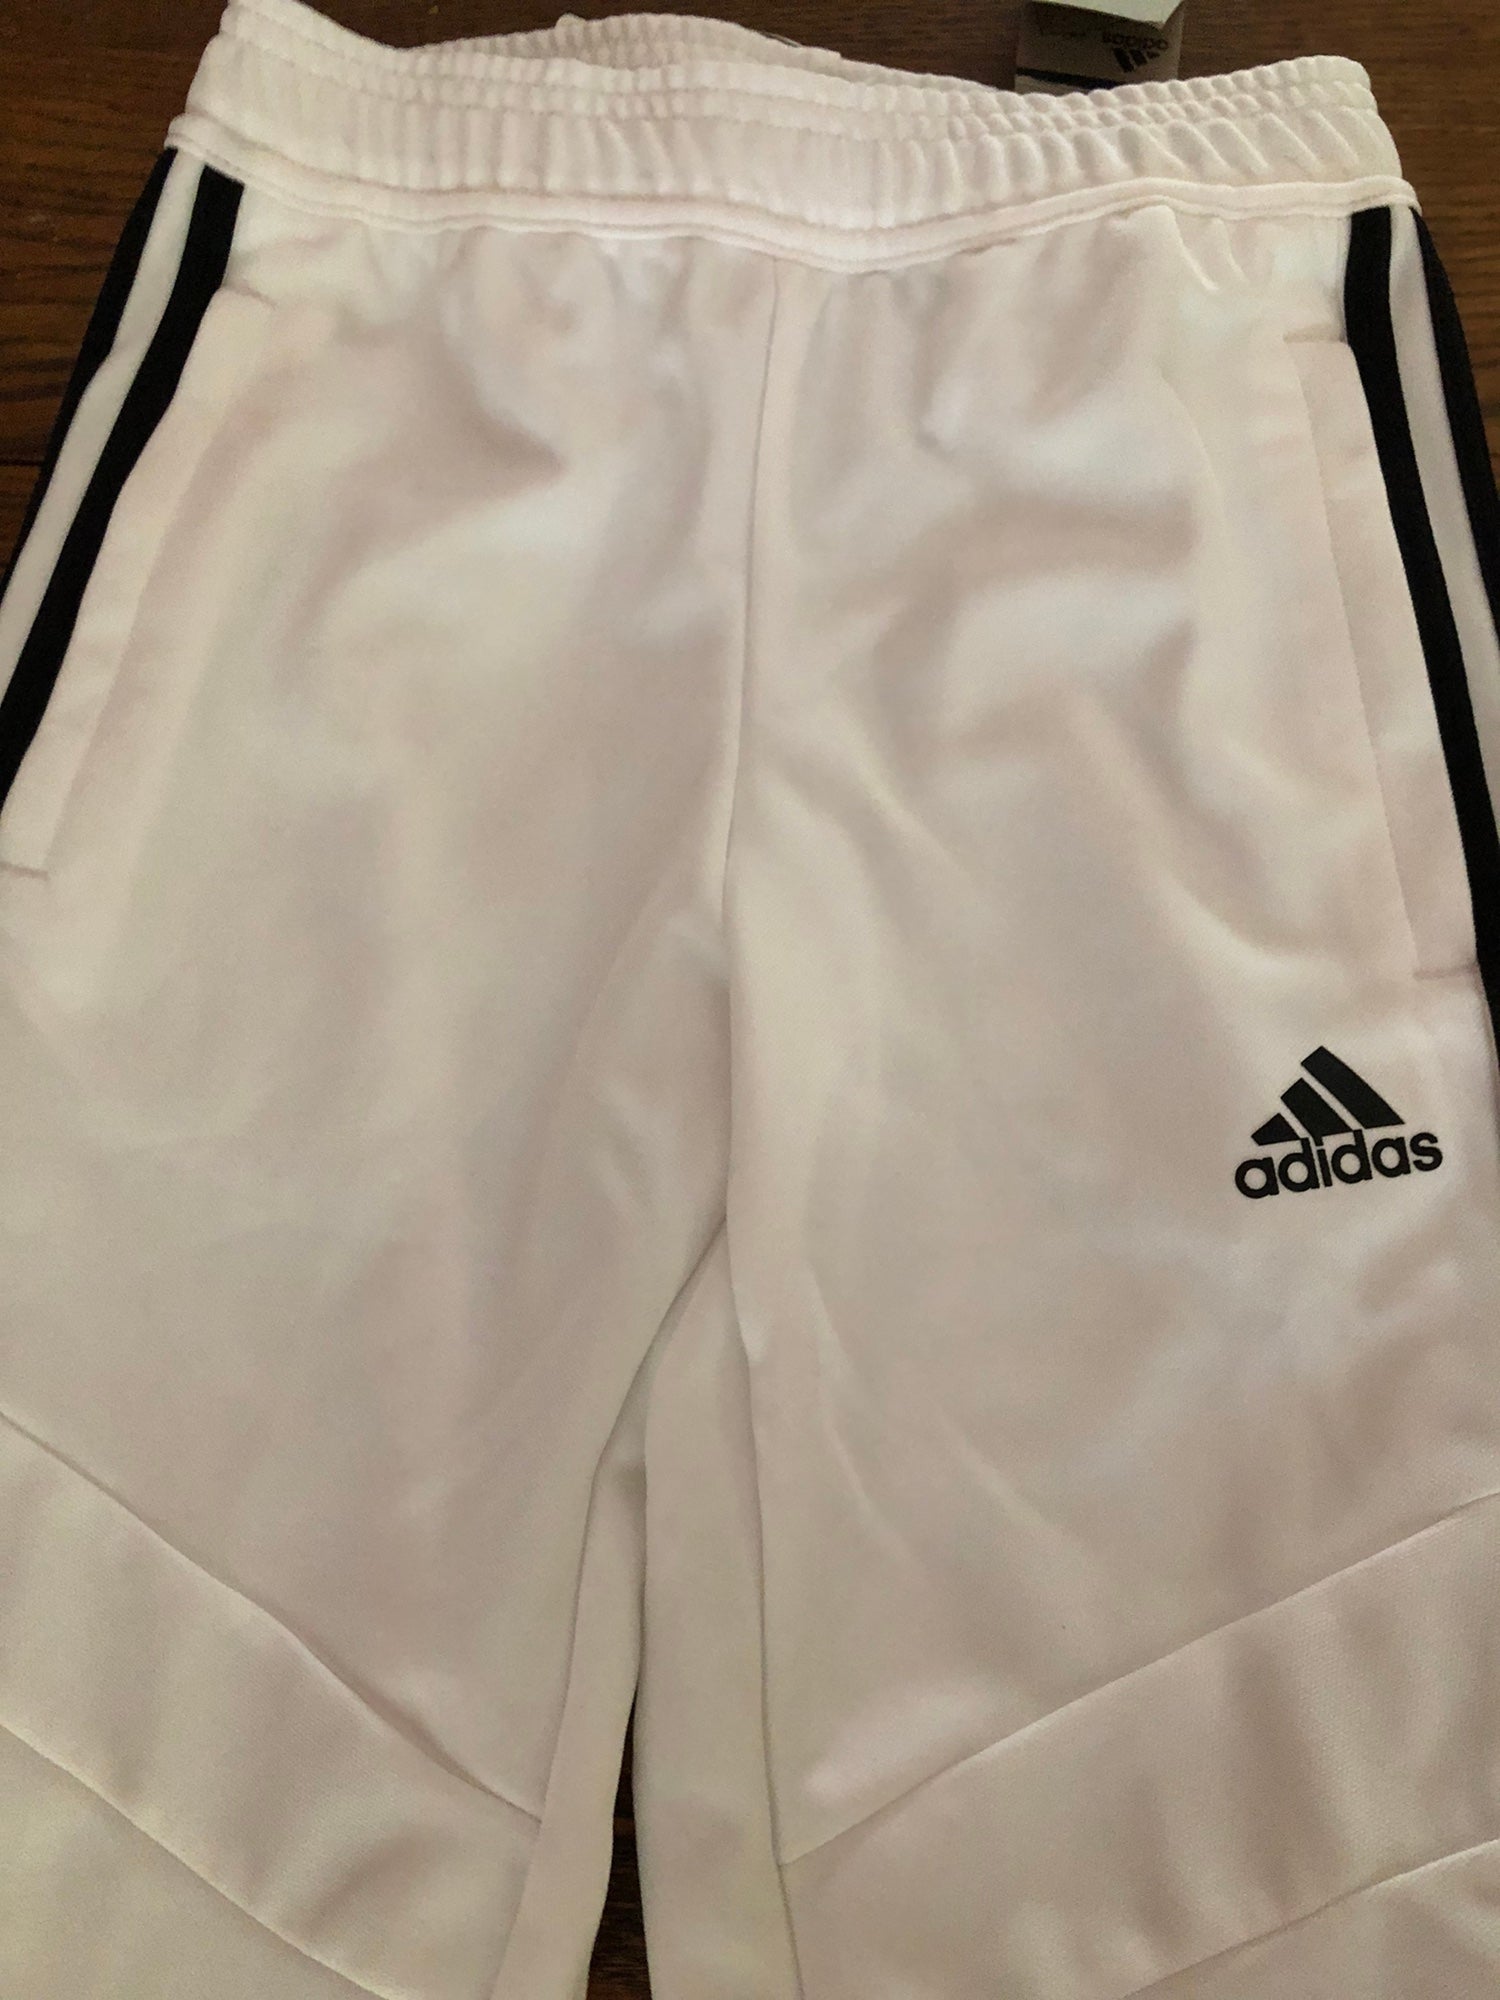 adidas Tiro 23 League Pants - Black | Men's Soccer | adidas US